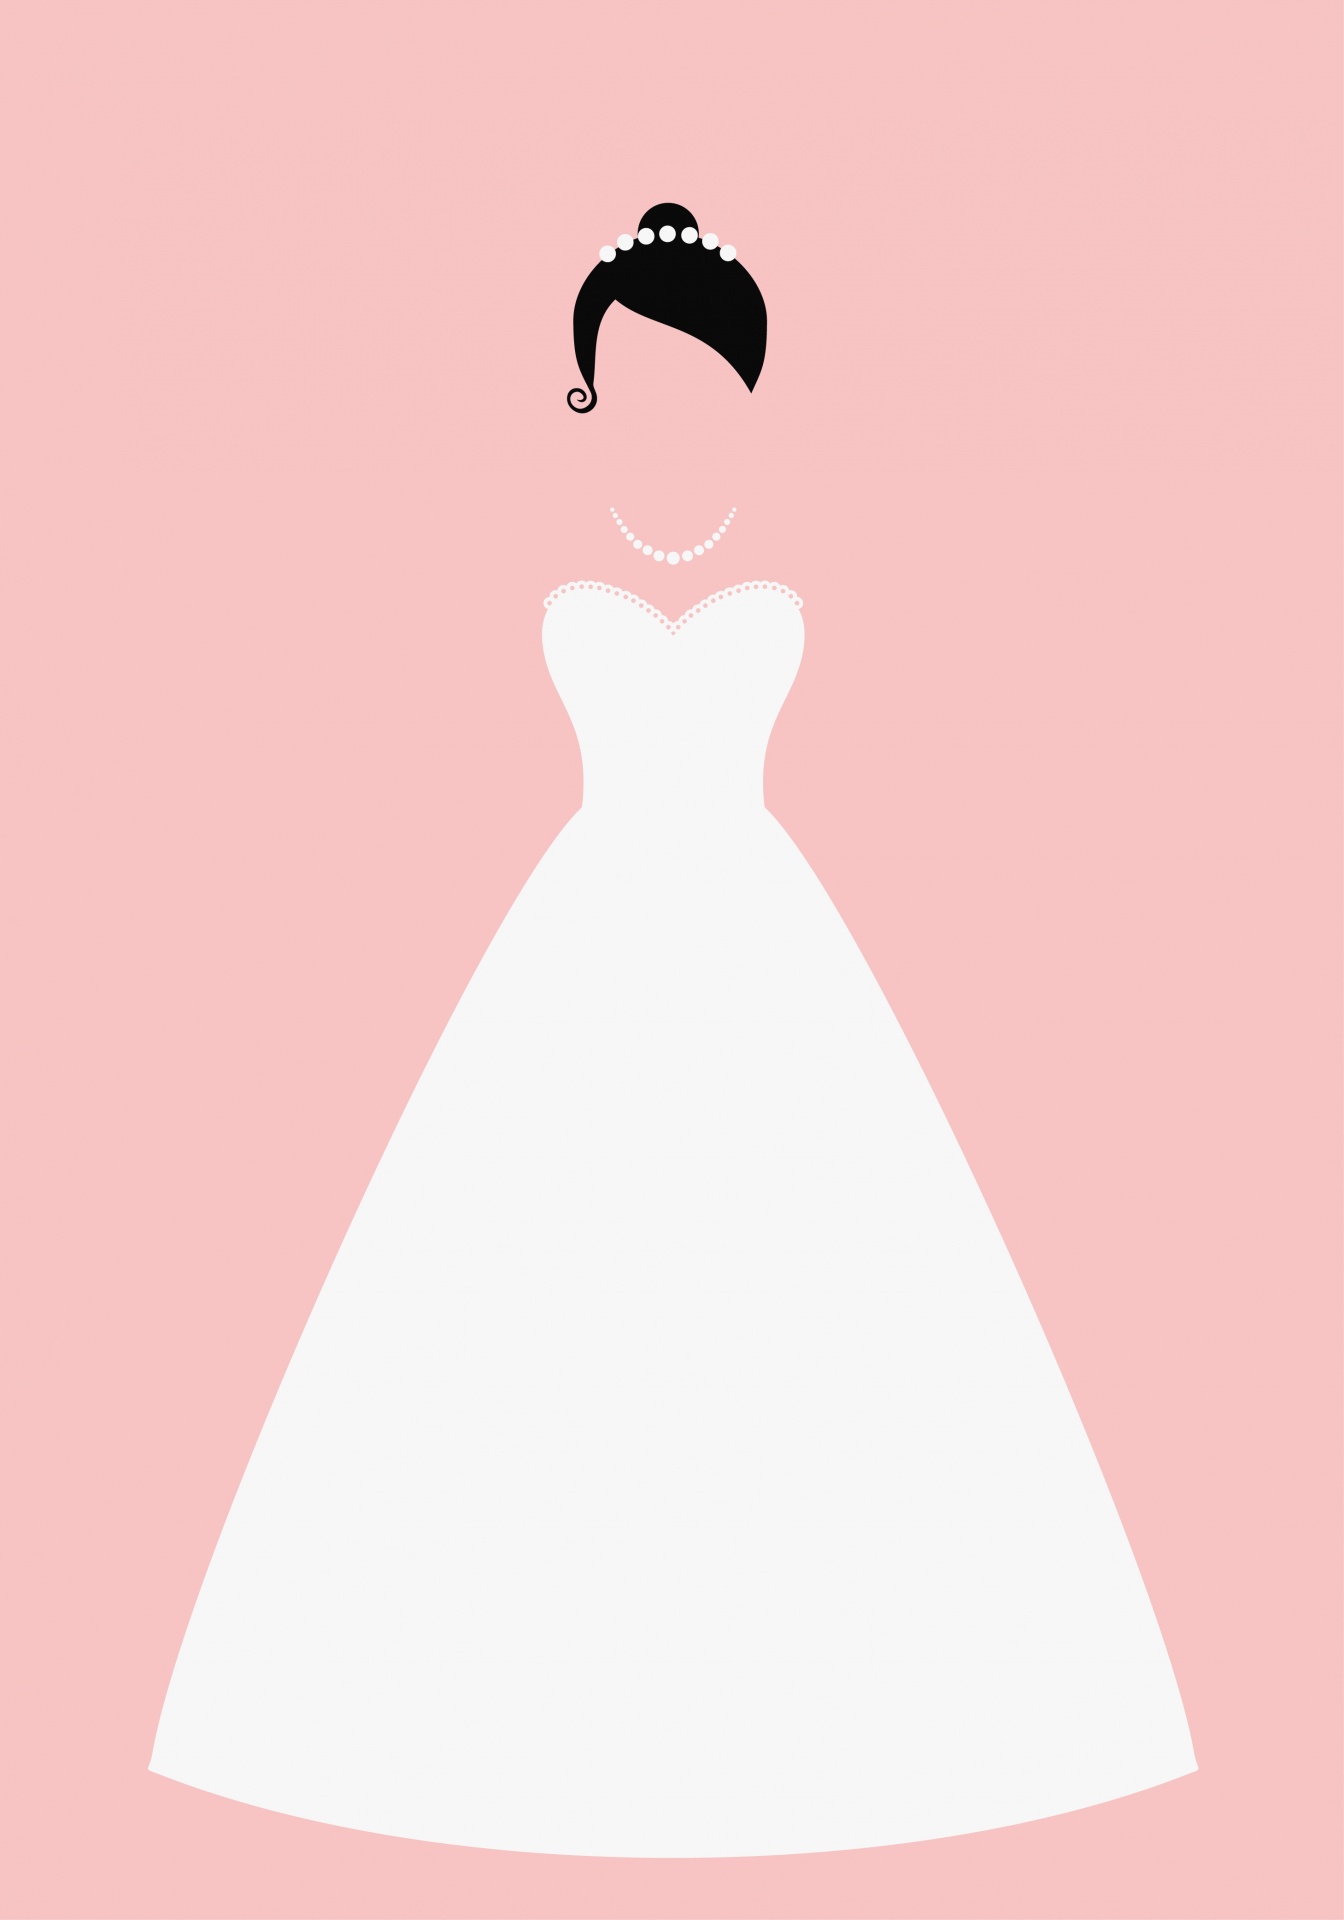 Bride Wedding Dress Illustration